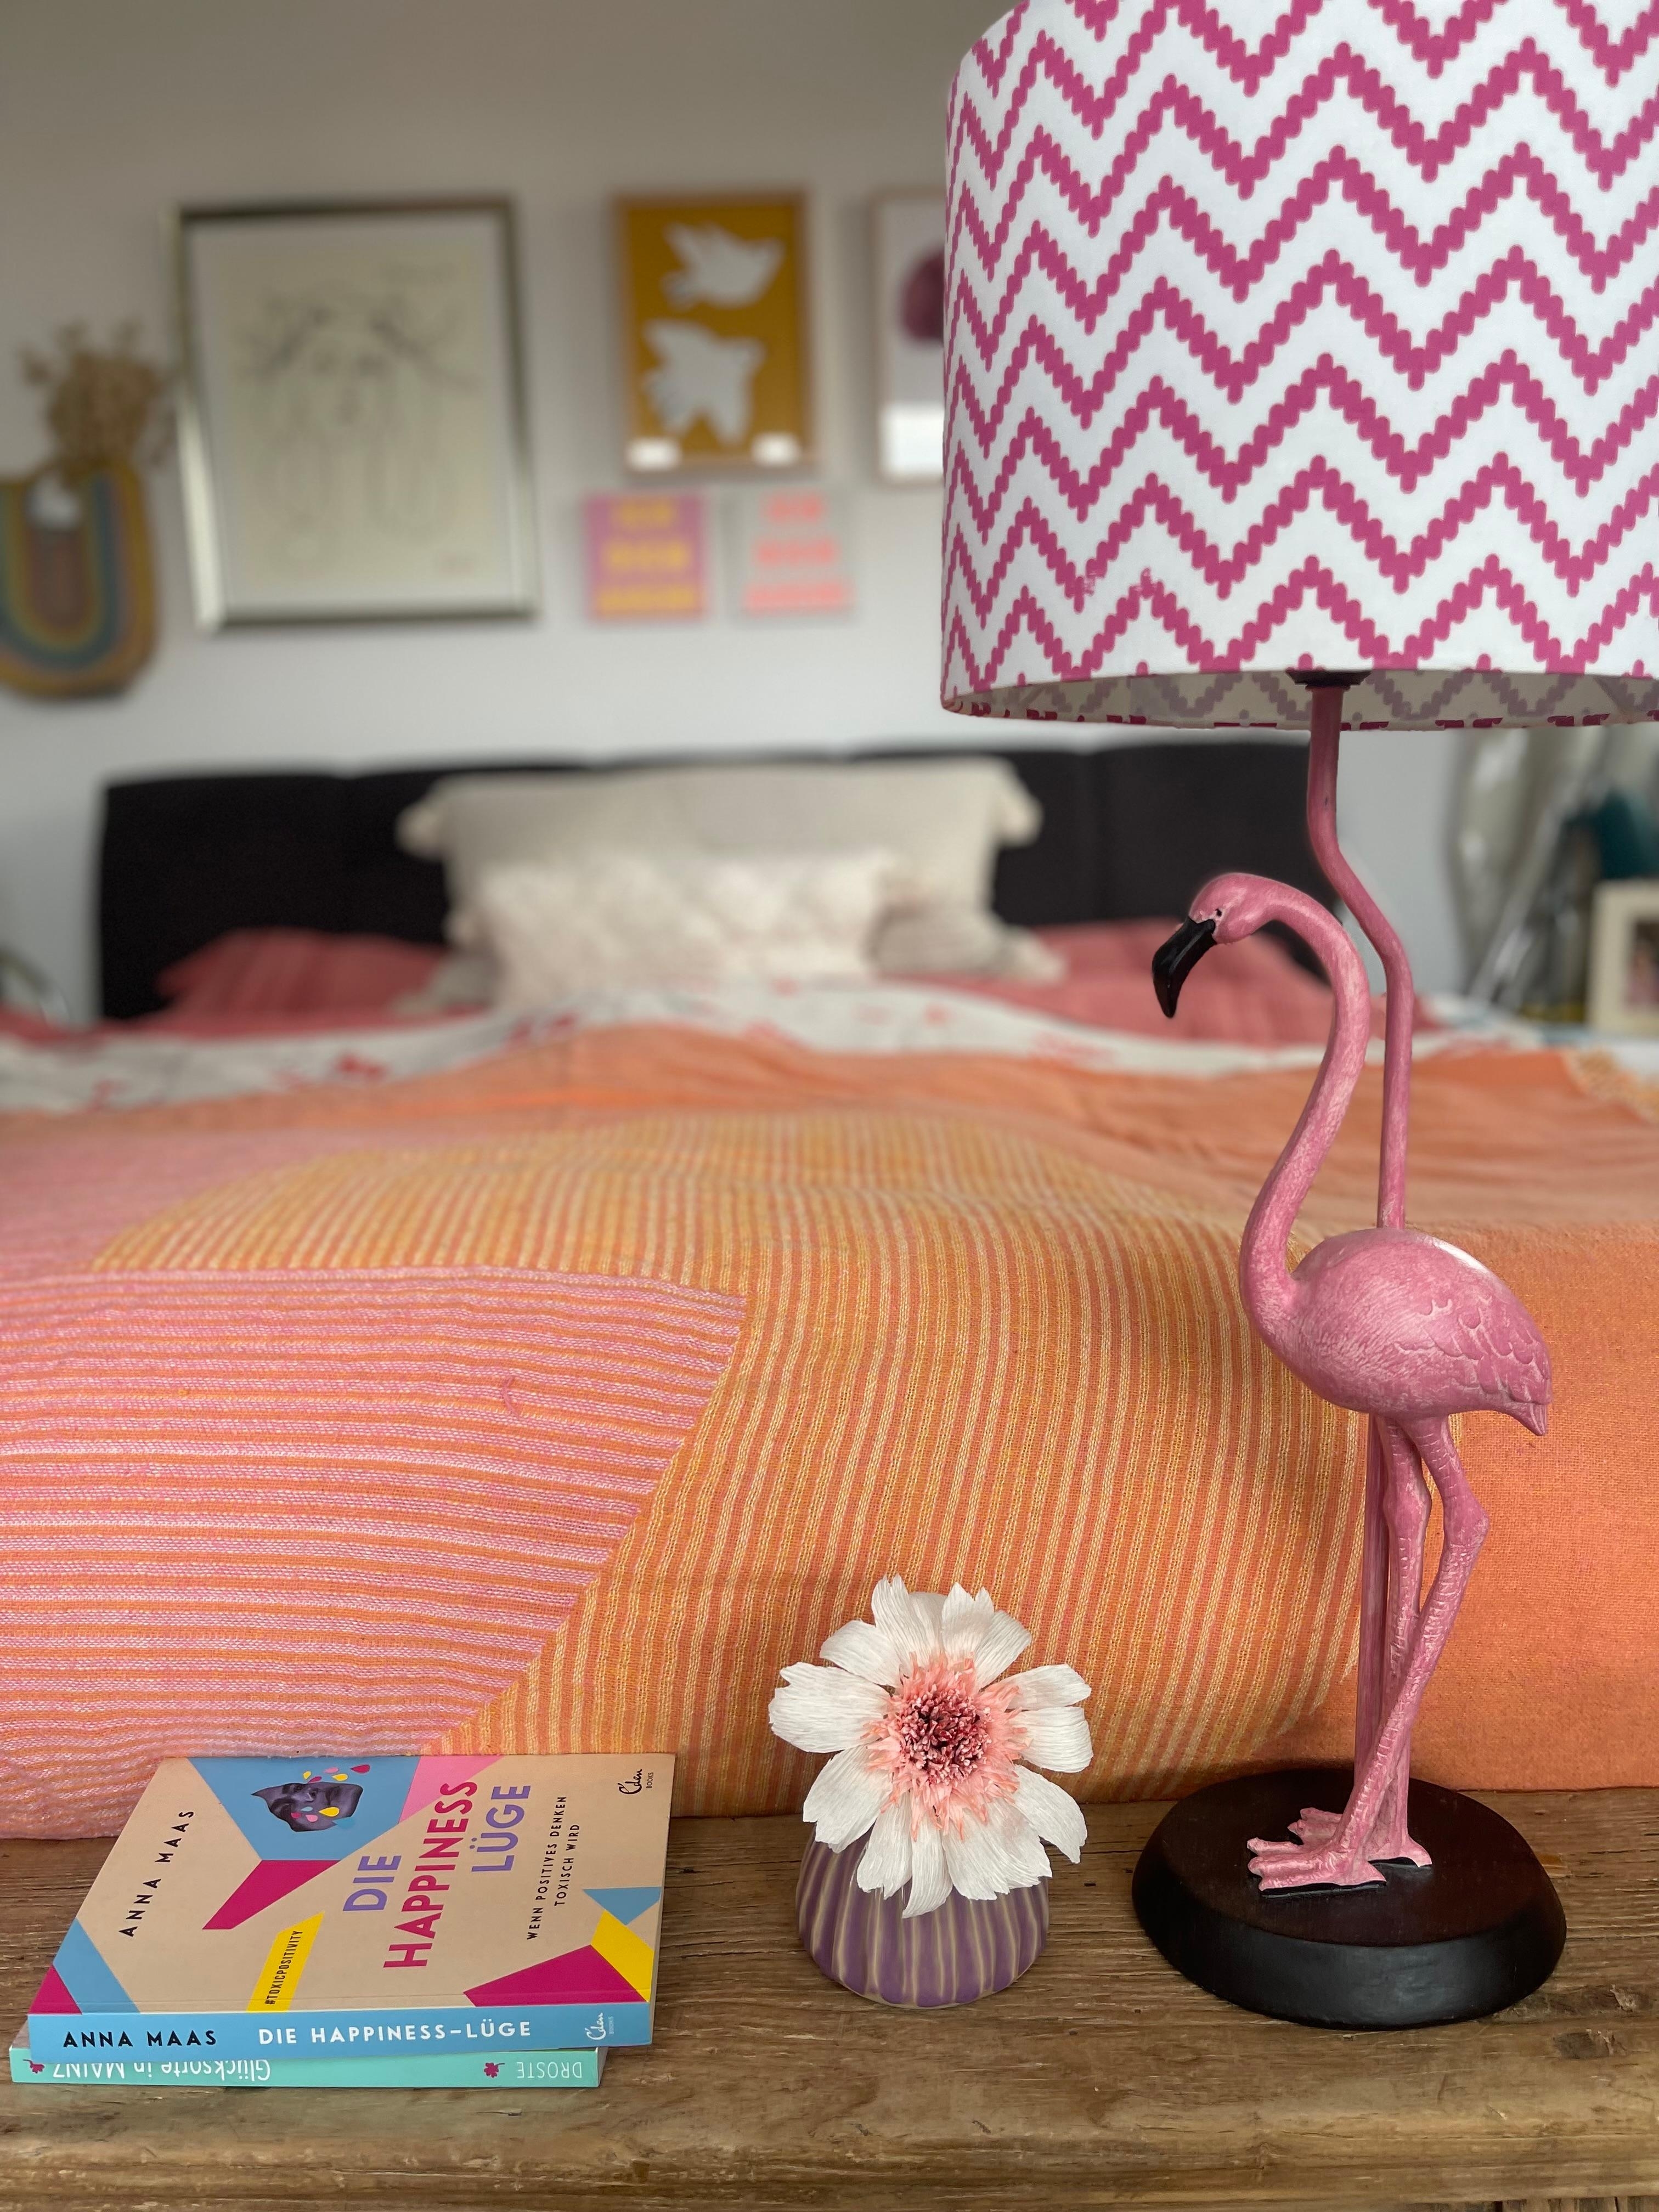 Flamingo in the bedroom  
#livingchallenge #bedroom #flamingolamp #light #fun #colourfulhome #cheers2colour #farbenfro #villakunterbunt #ichmachmirdieweltwiesiemirgefällt